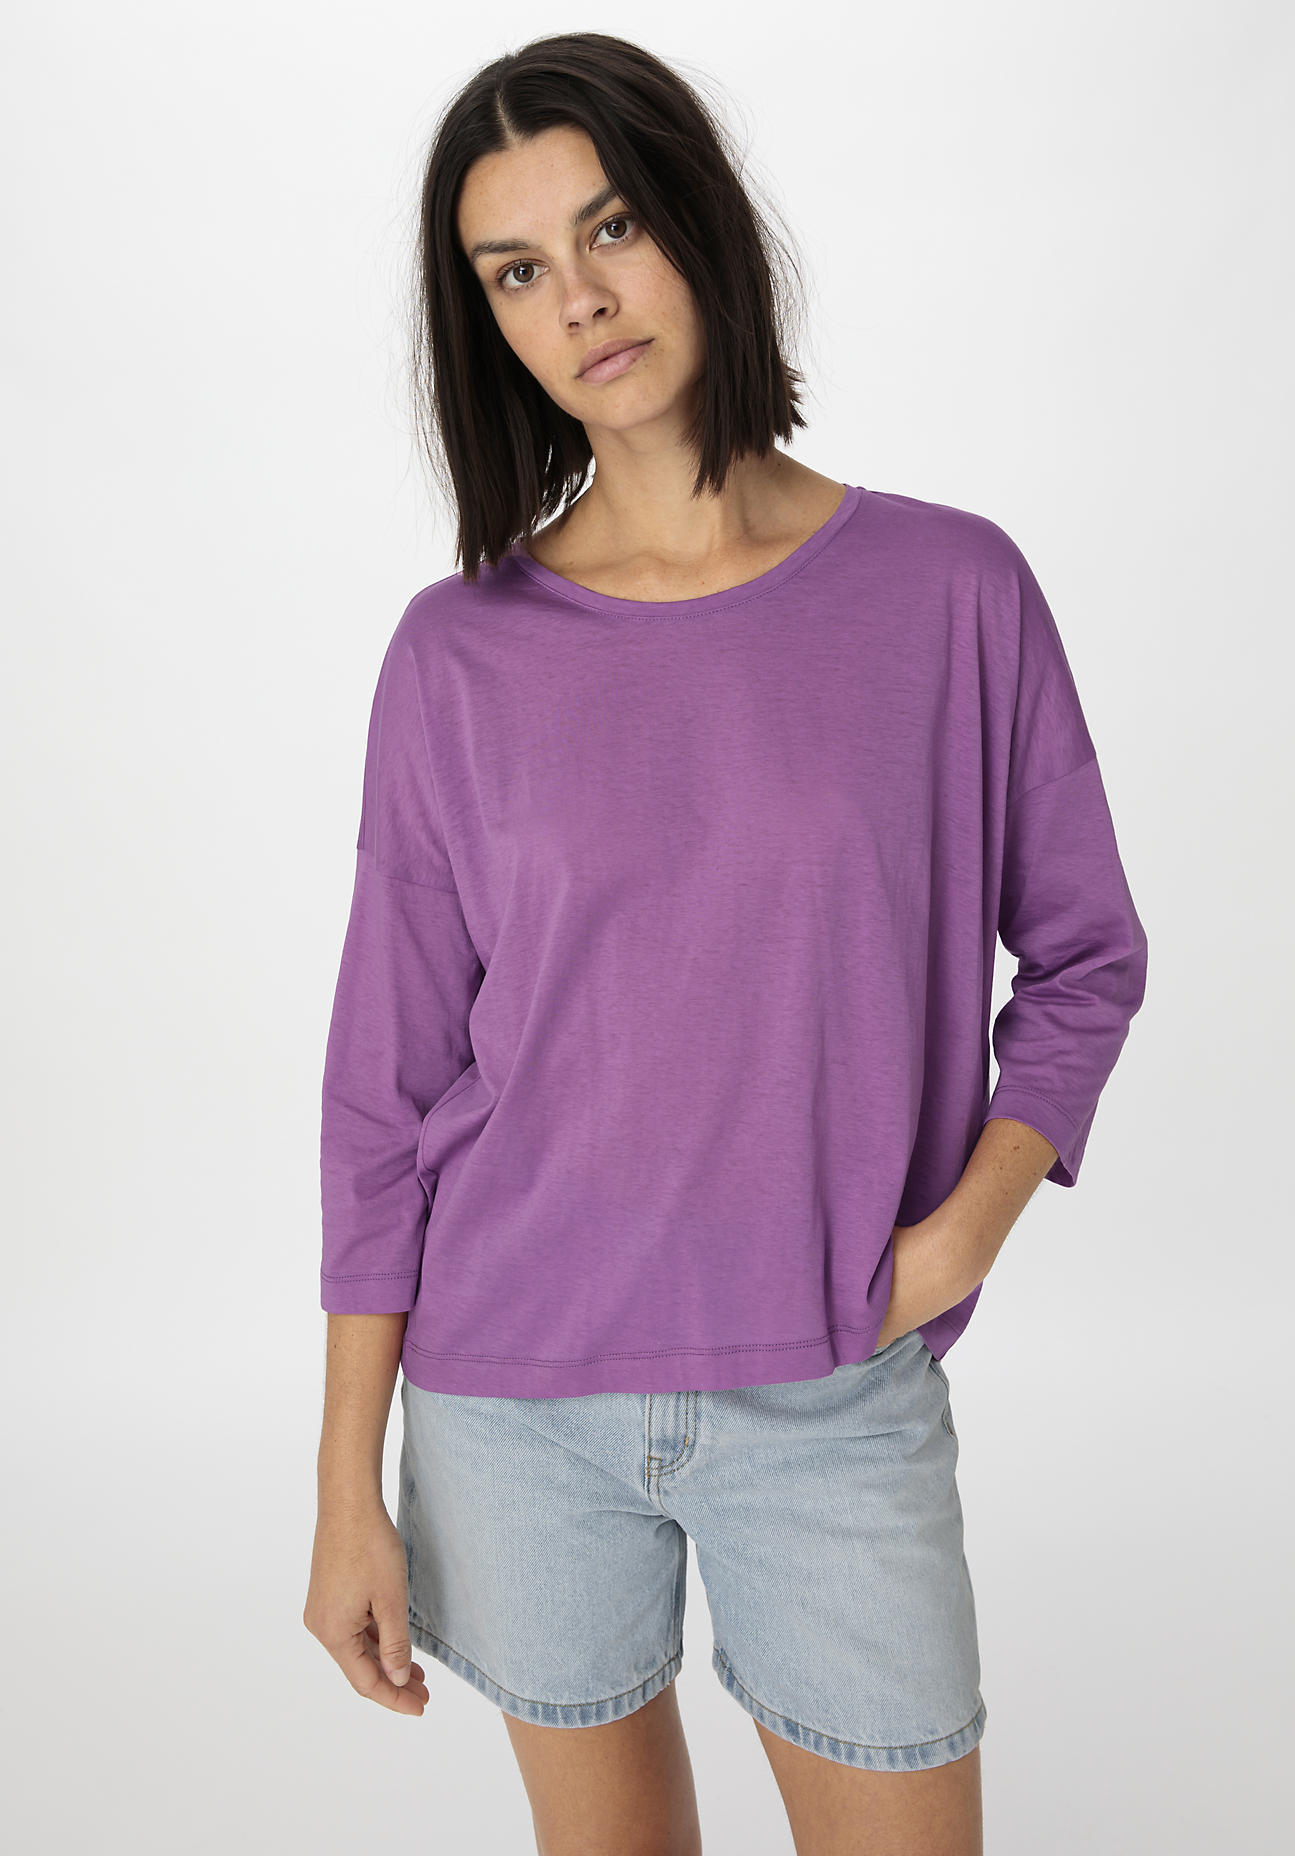 hessnatur Damen Premium Light Shirt Oversized aus Bio-Baumwolle - lila - Größe XL